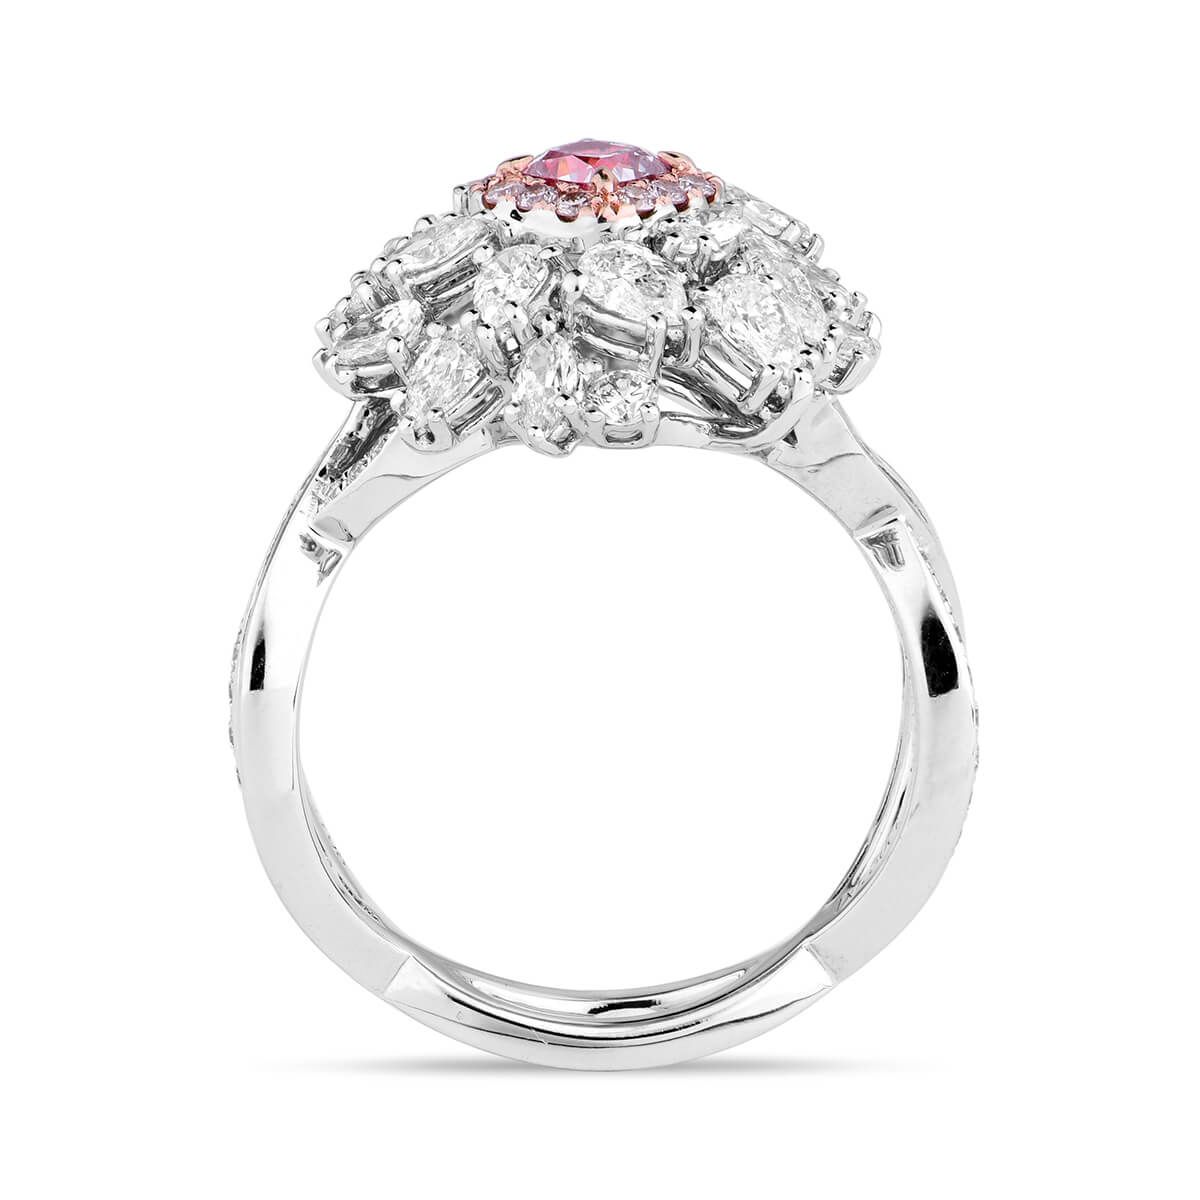 Fancy Light Purplish Pink Diamond Ring, 1.98 Ct. TW, Cushion shape, GIA Certified, 5192056913